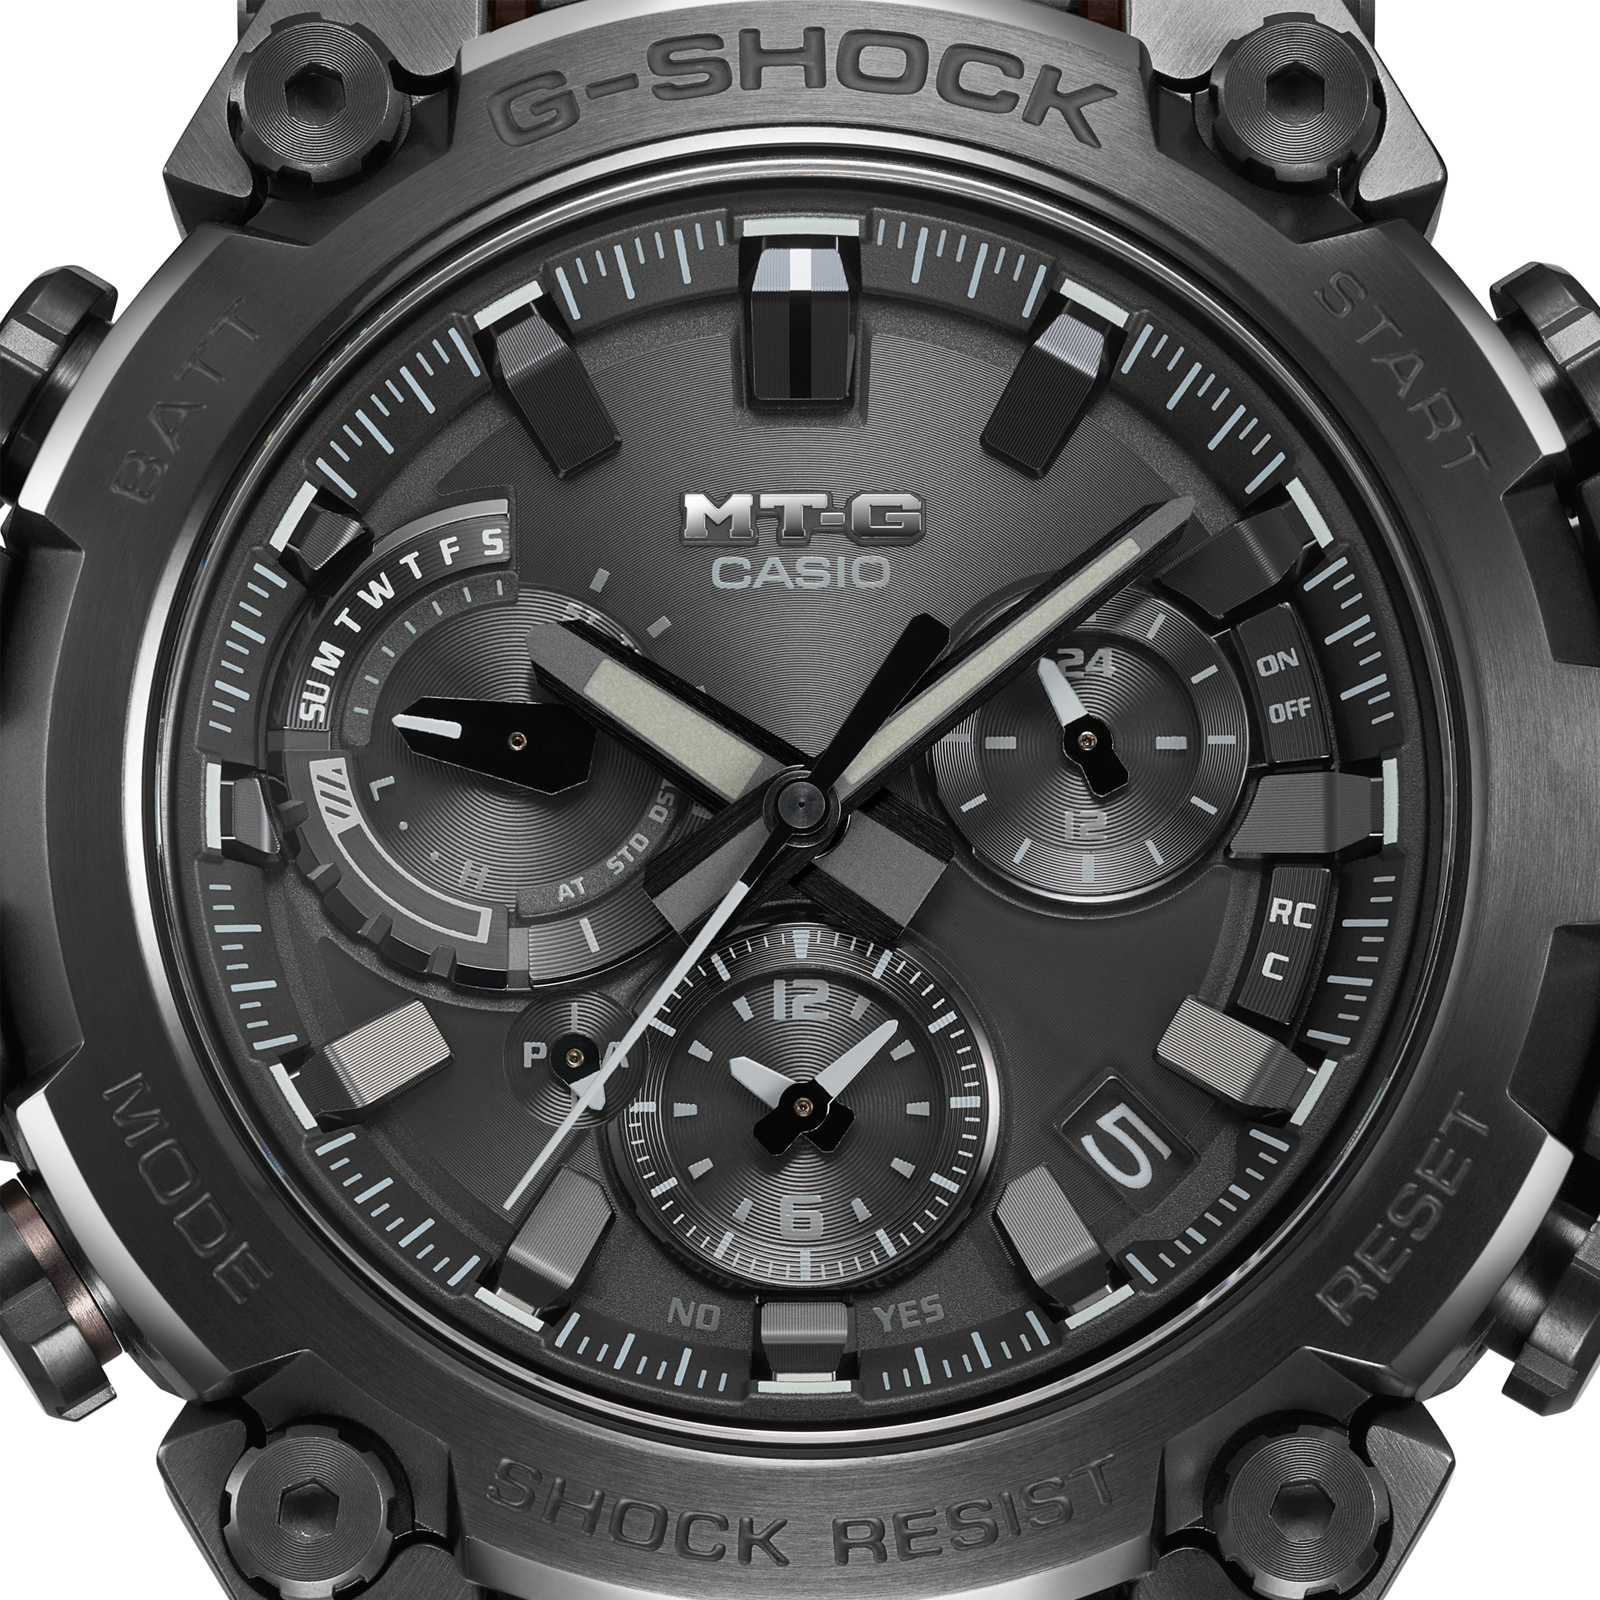 Reloj G-SHOCK MTG-B3000B-1ADR Resina/Acero Hombre Negro